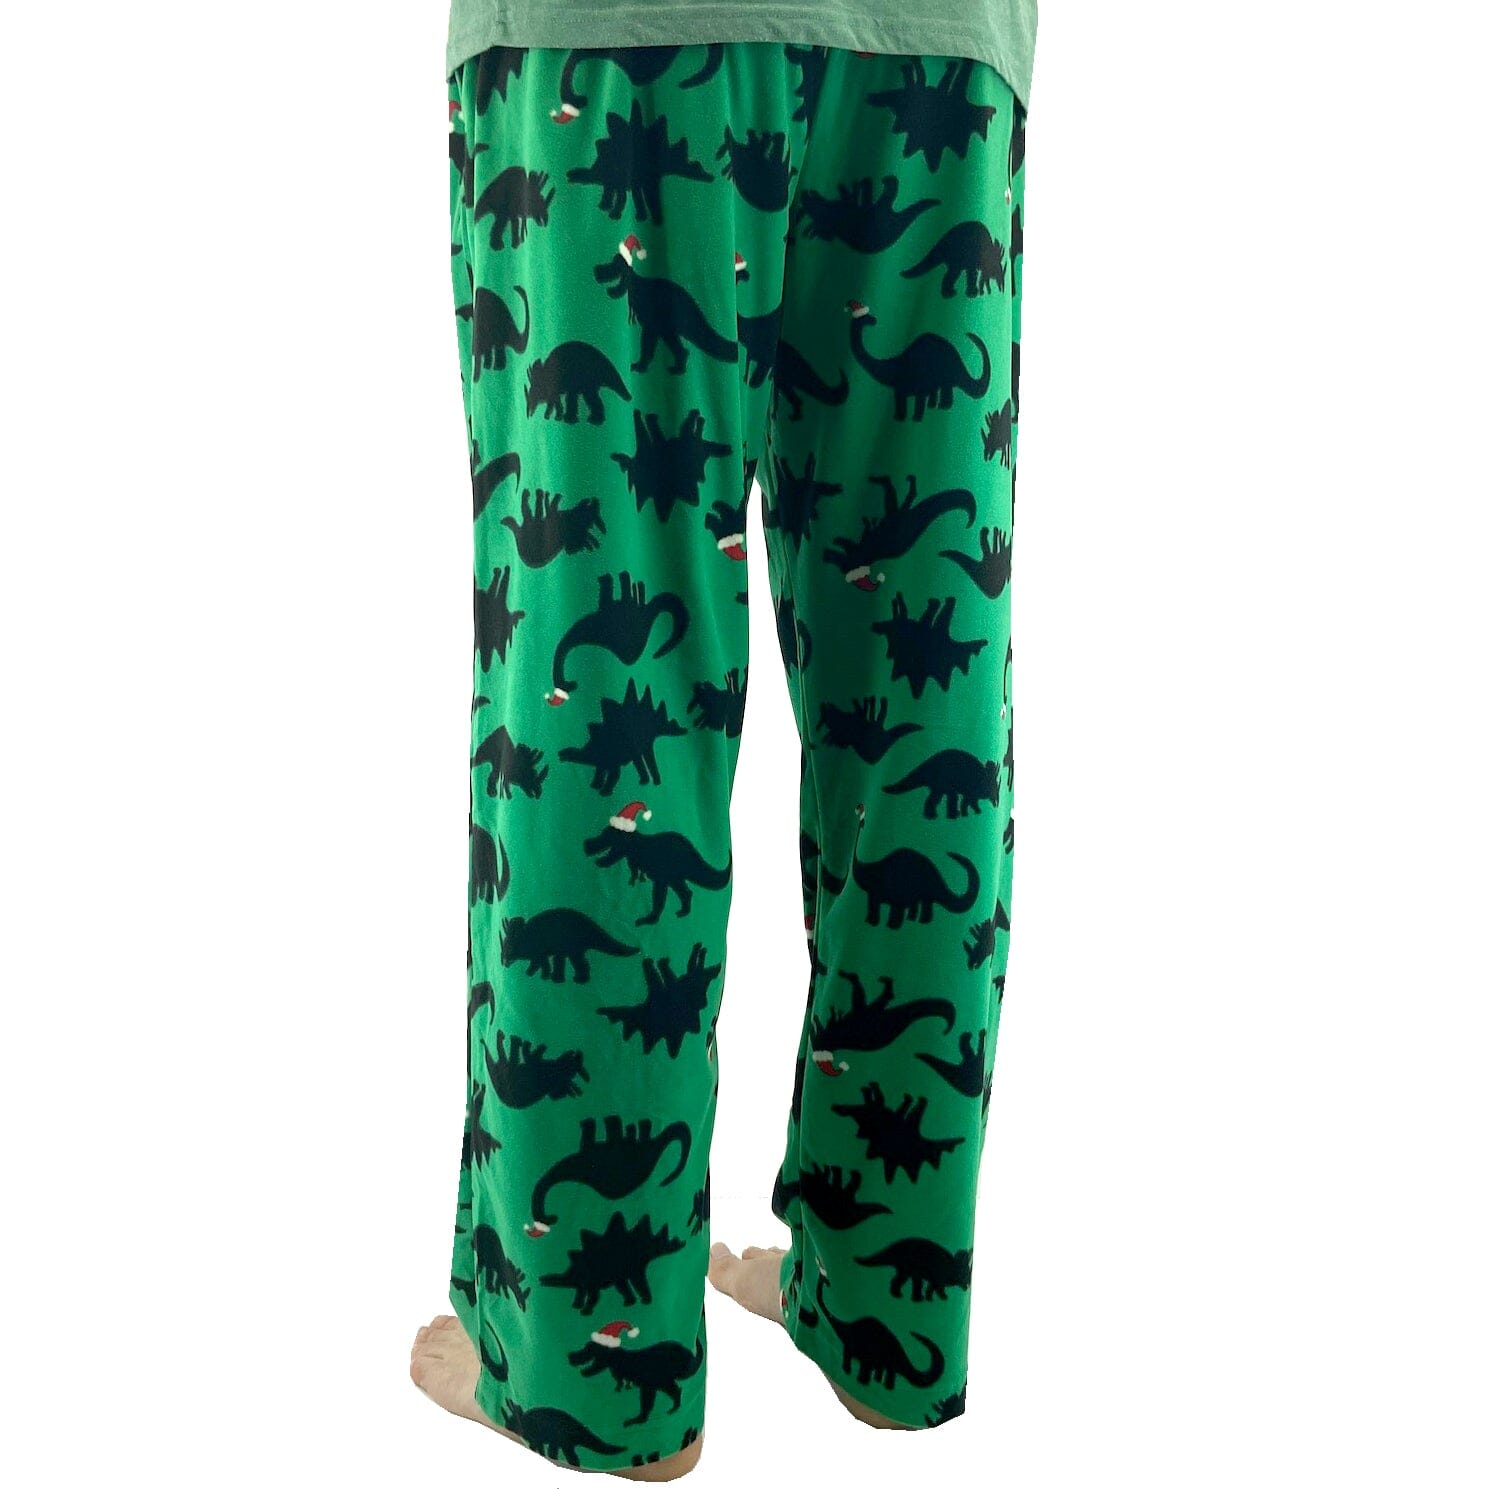 Men's Dinosaur Silhouette Patterned Ultra-Soft Fleece Pajama PJ Pants